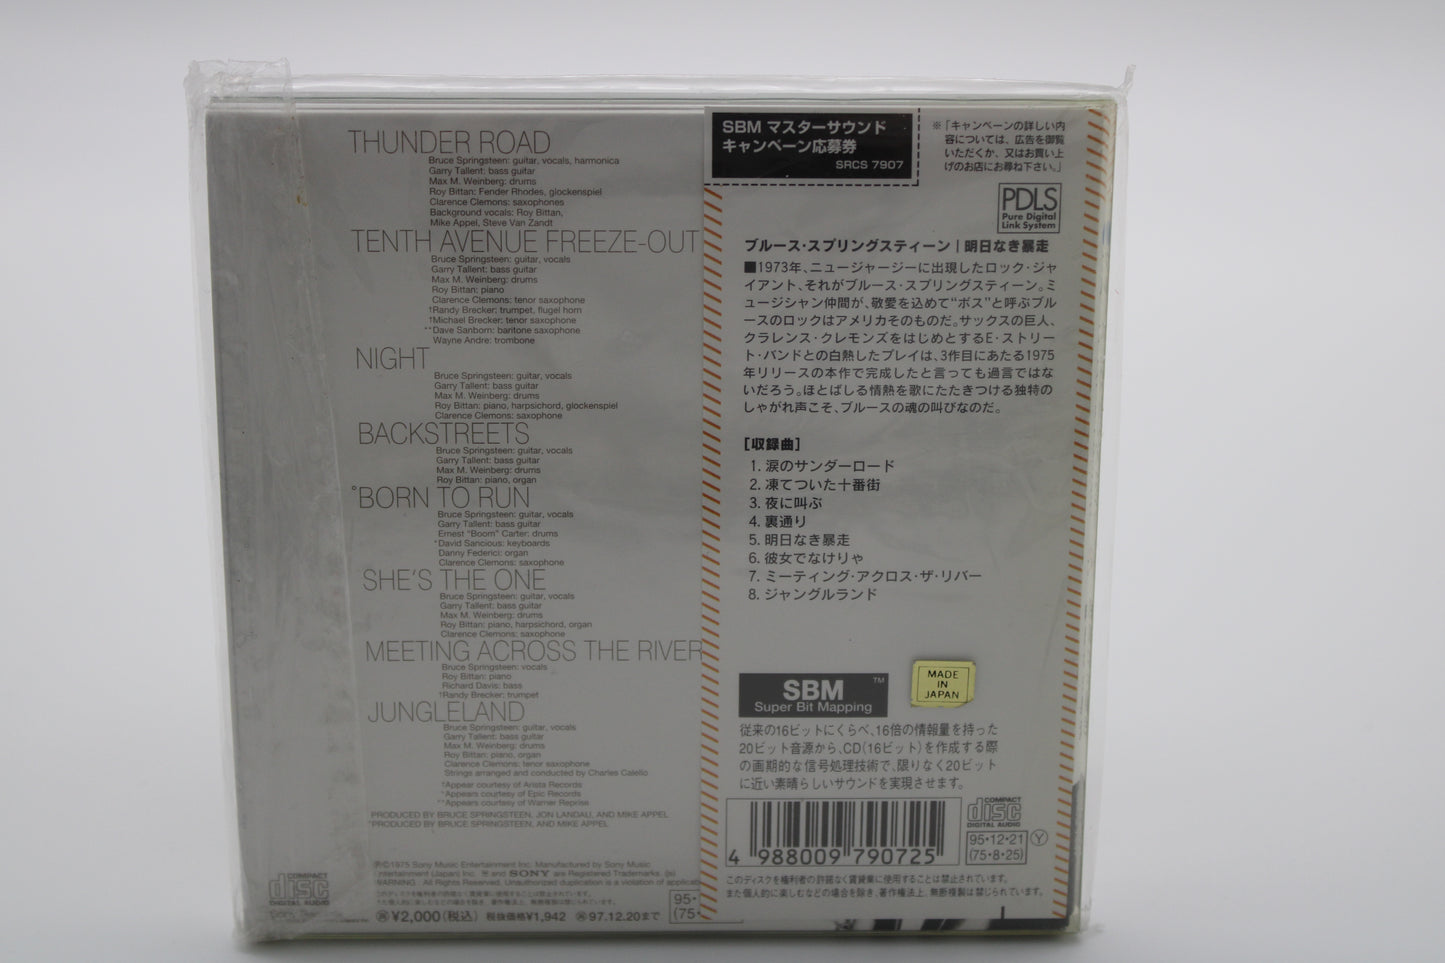 Bruce Springsteen & ESB - CD/Japan "Born to Run" Import - Near Mint